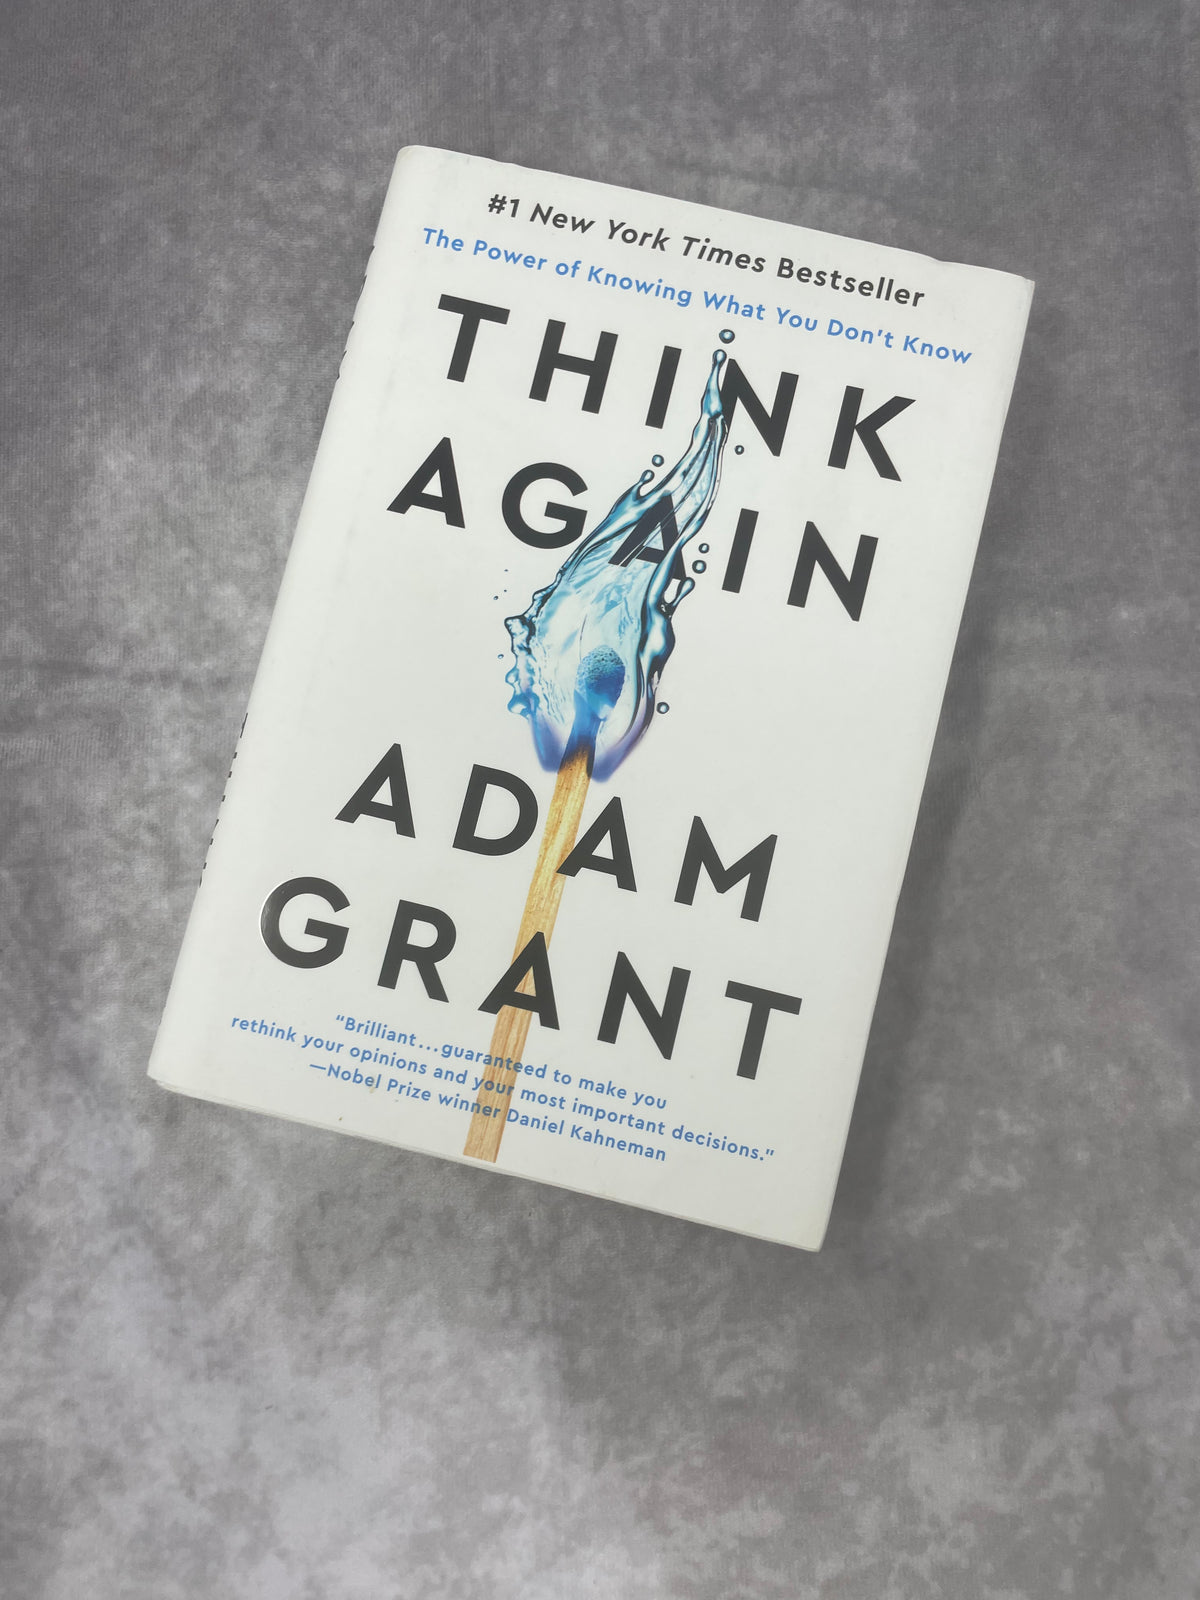 Think Again by Adam Grant